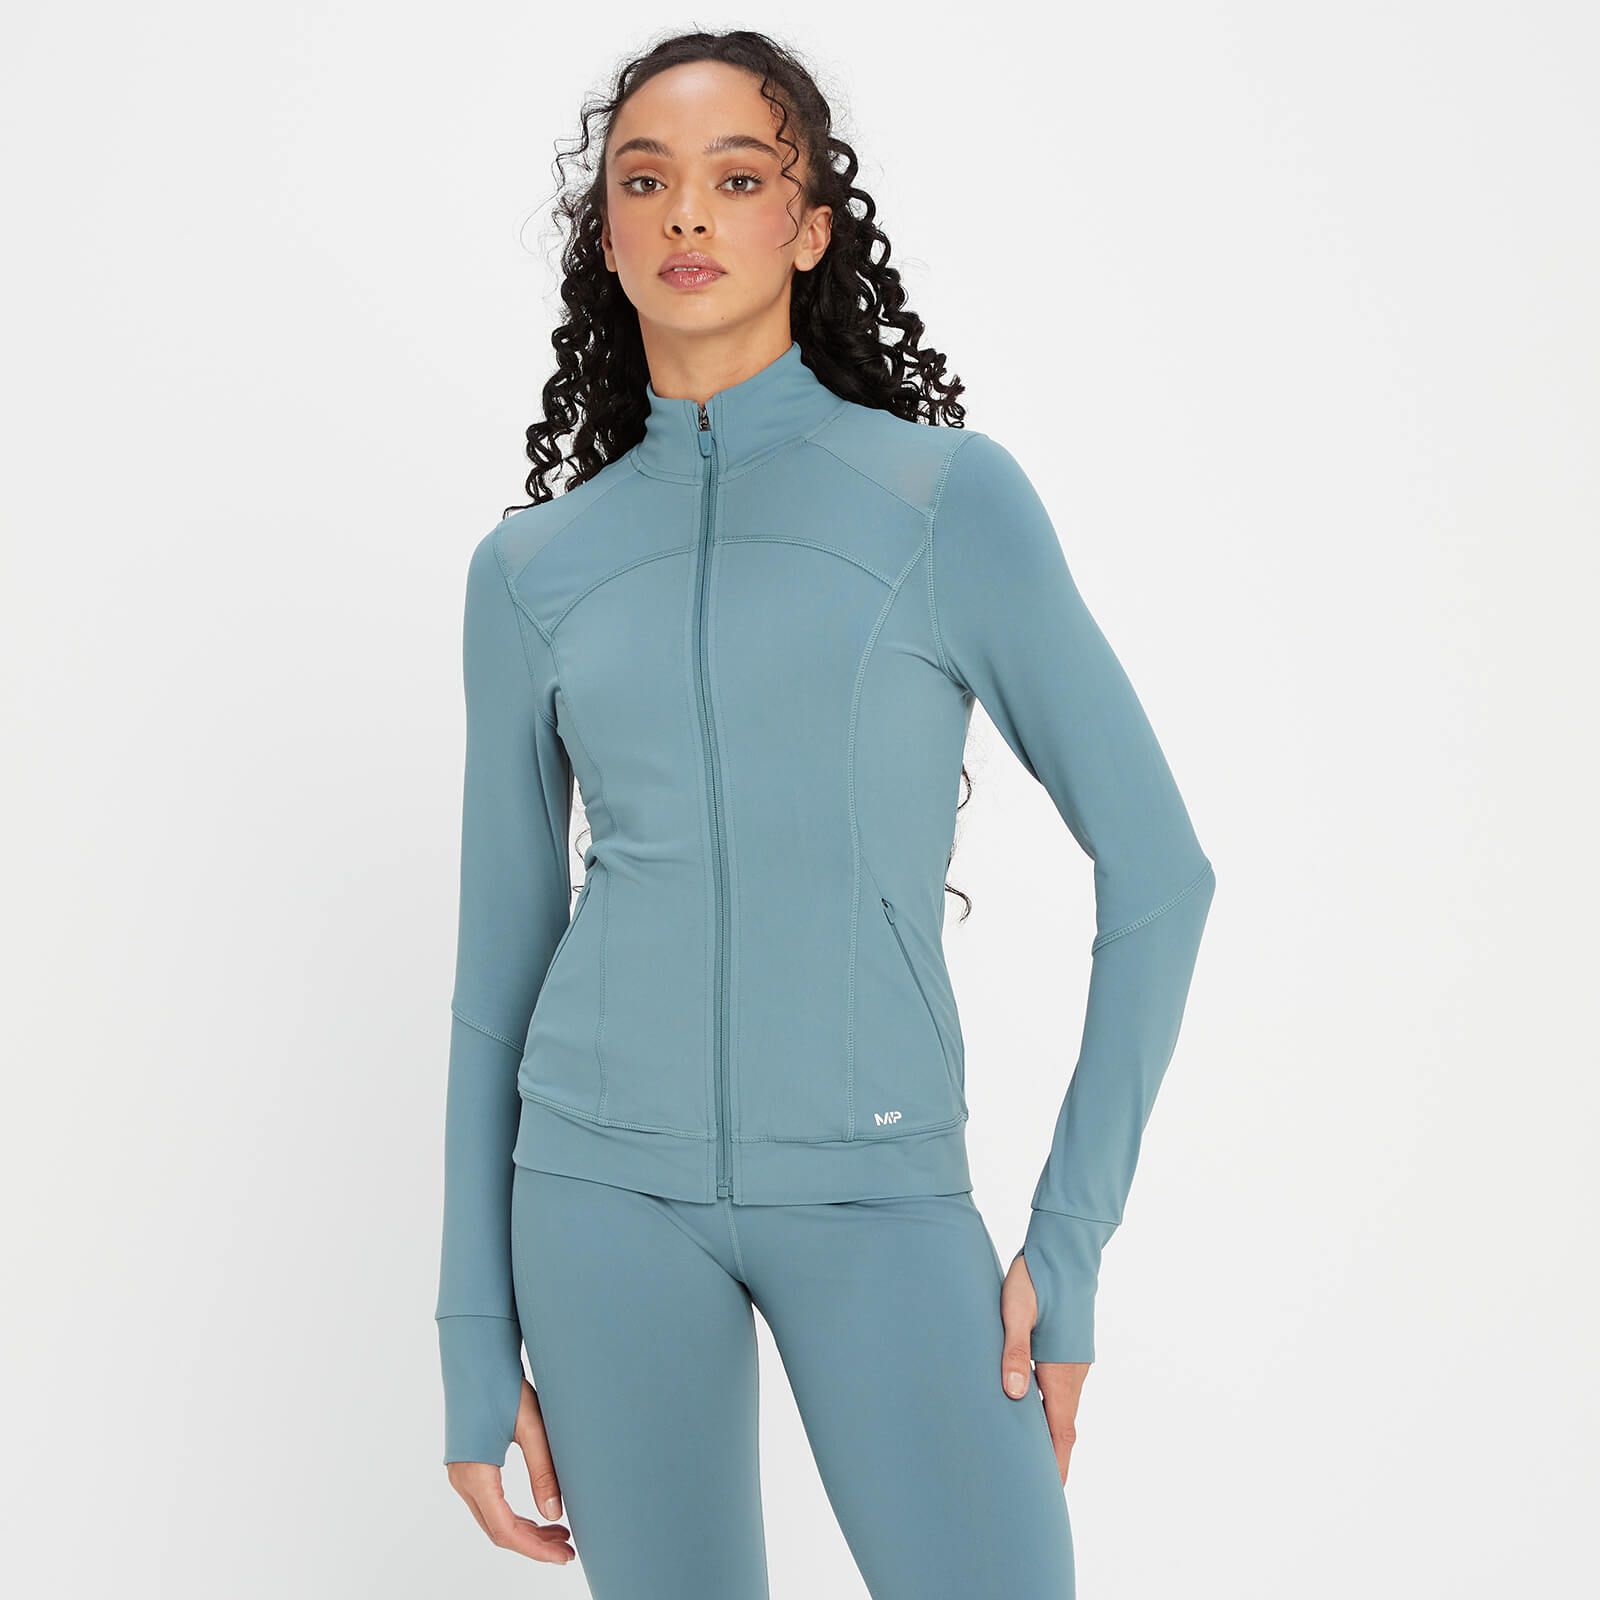 mp women's power mesh jacket - pebble blue - xxs